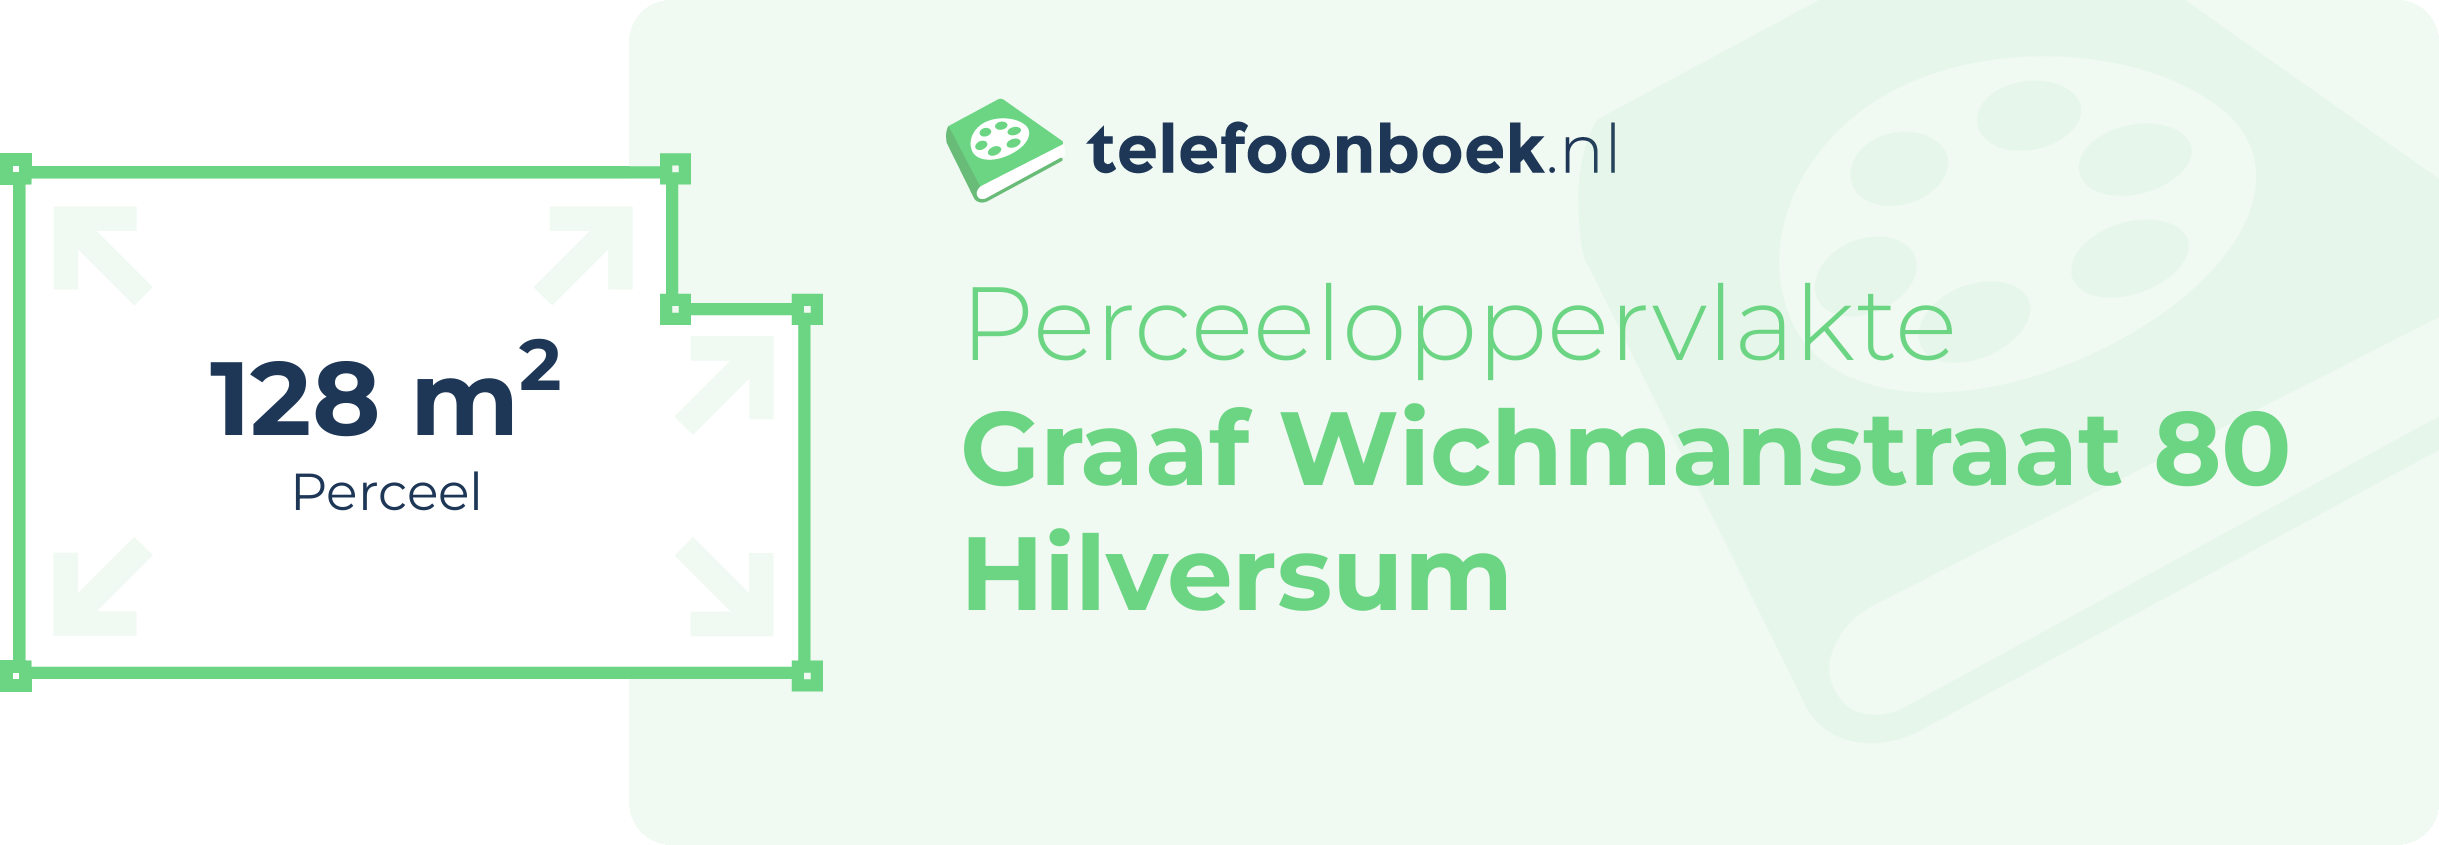 Perceeloppervlakte Graaf Wichmanstraat 80 Hilversum